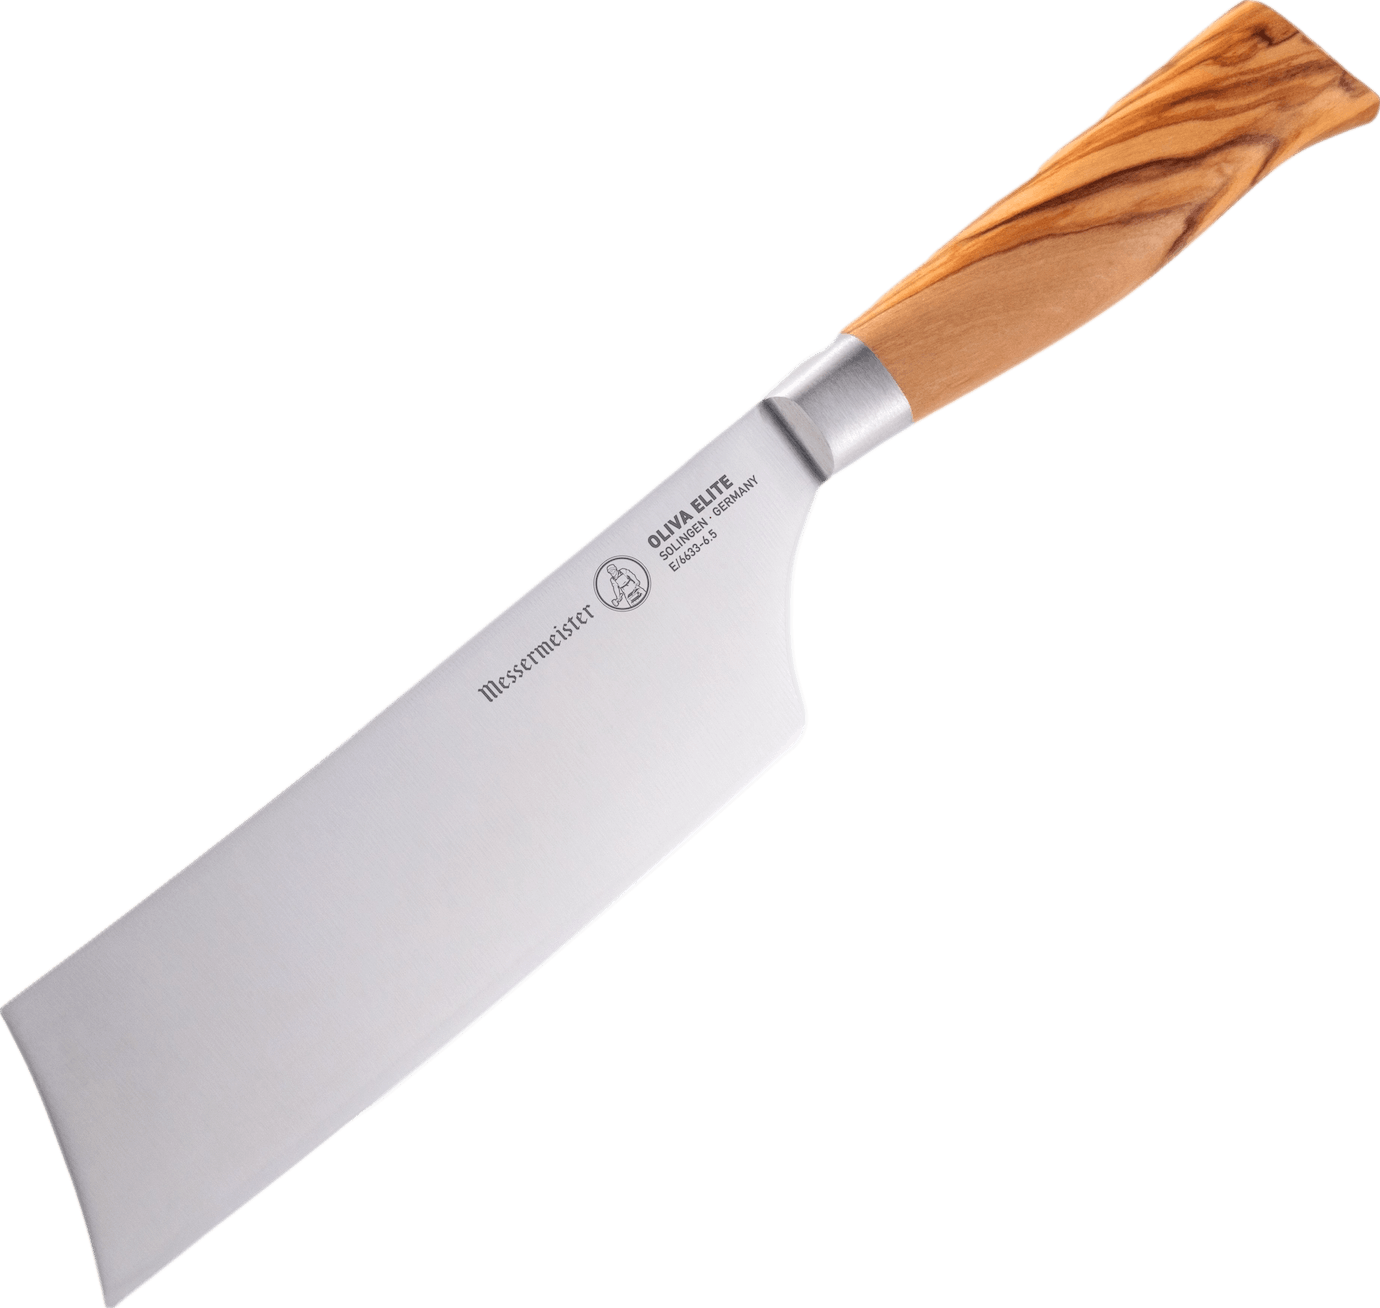 Messermeister Petite Messer Chef's Knife, 5 inch, Green